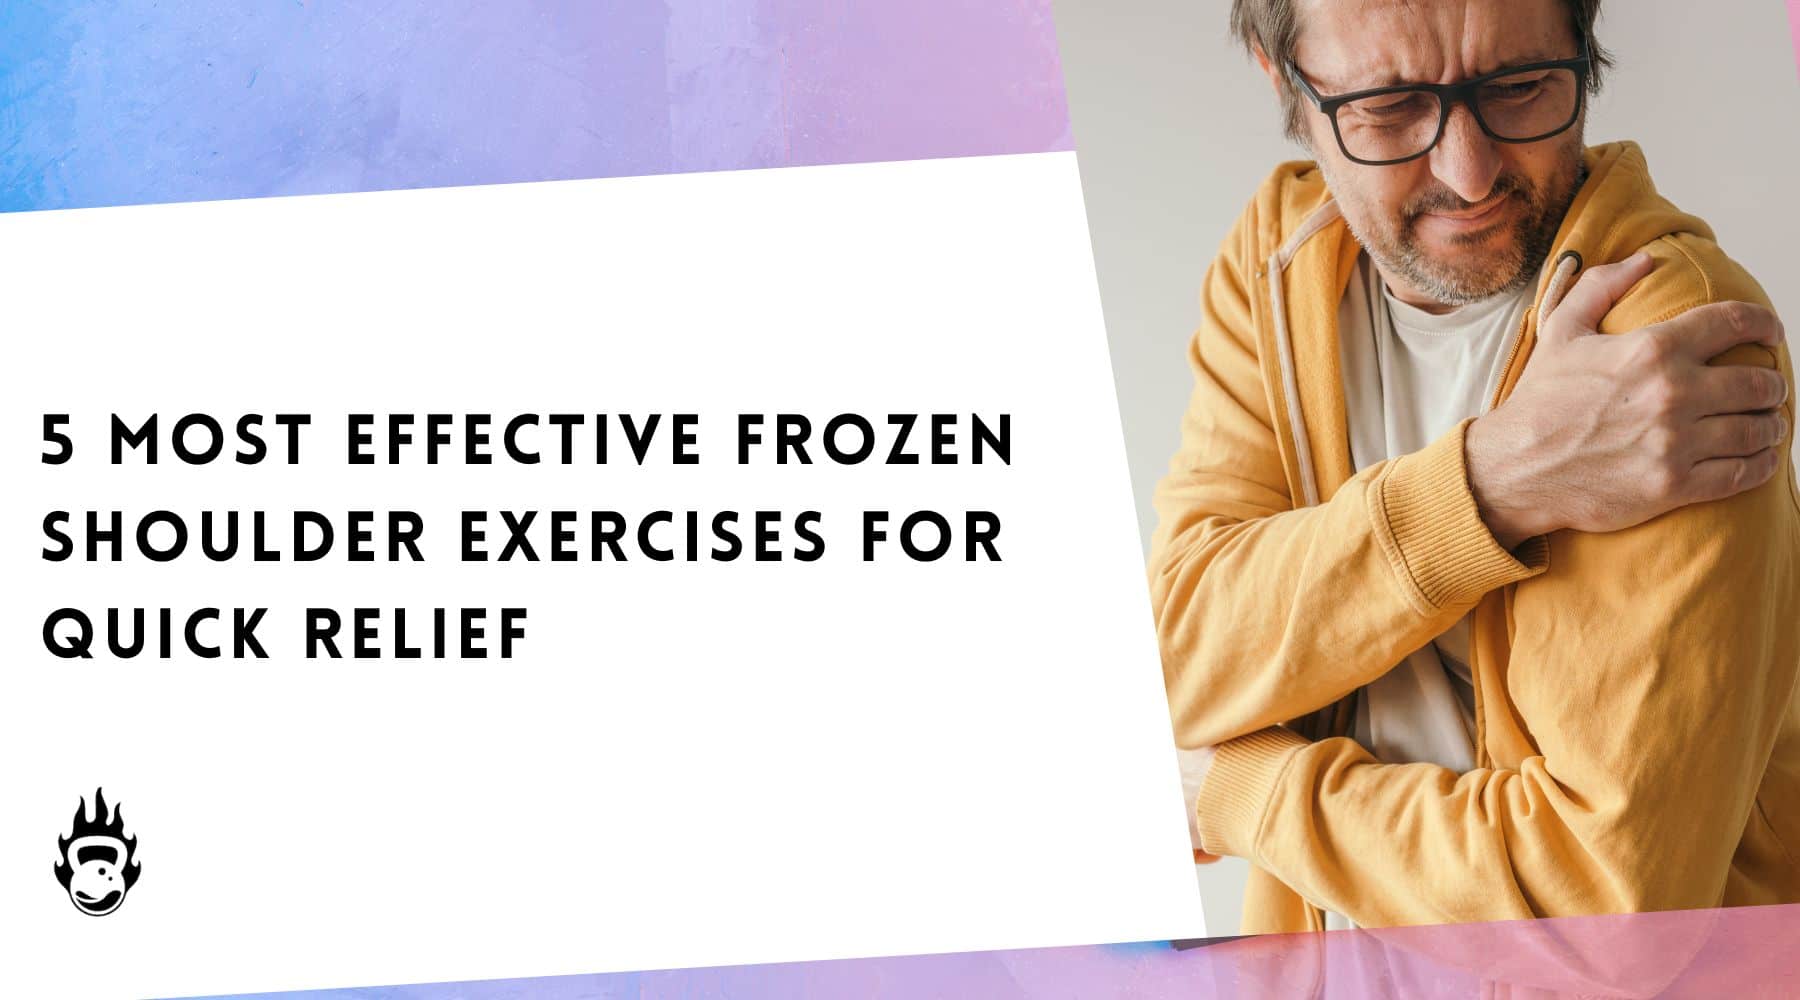 5 frozen shoulder exercises for quick relief